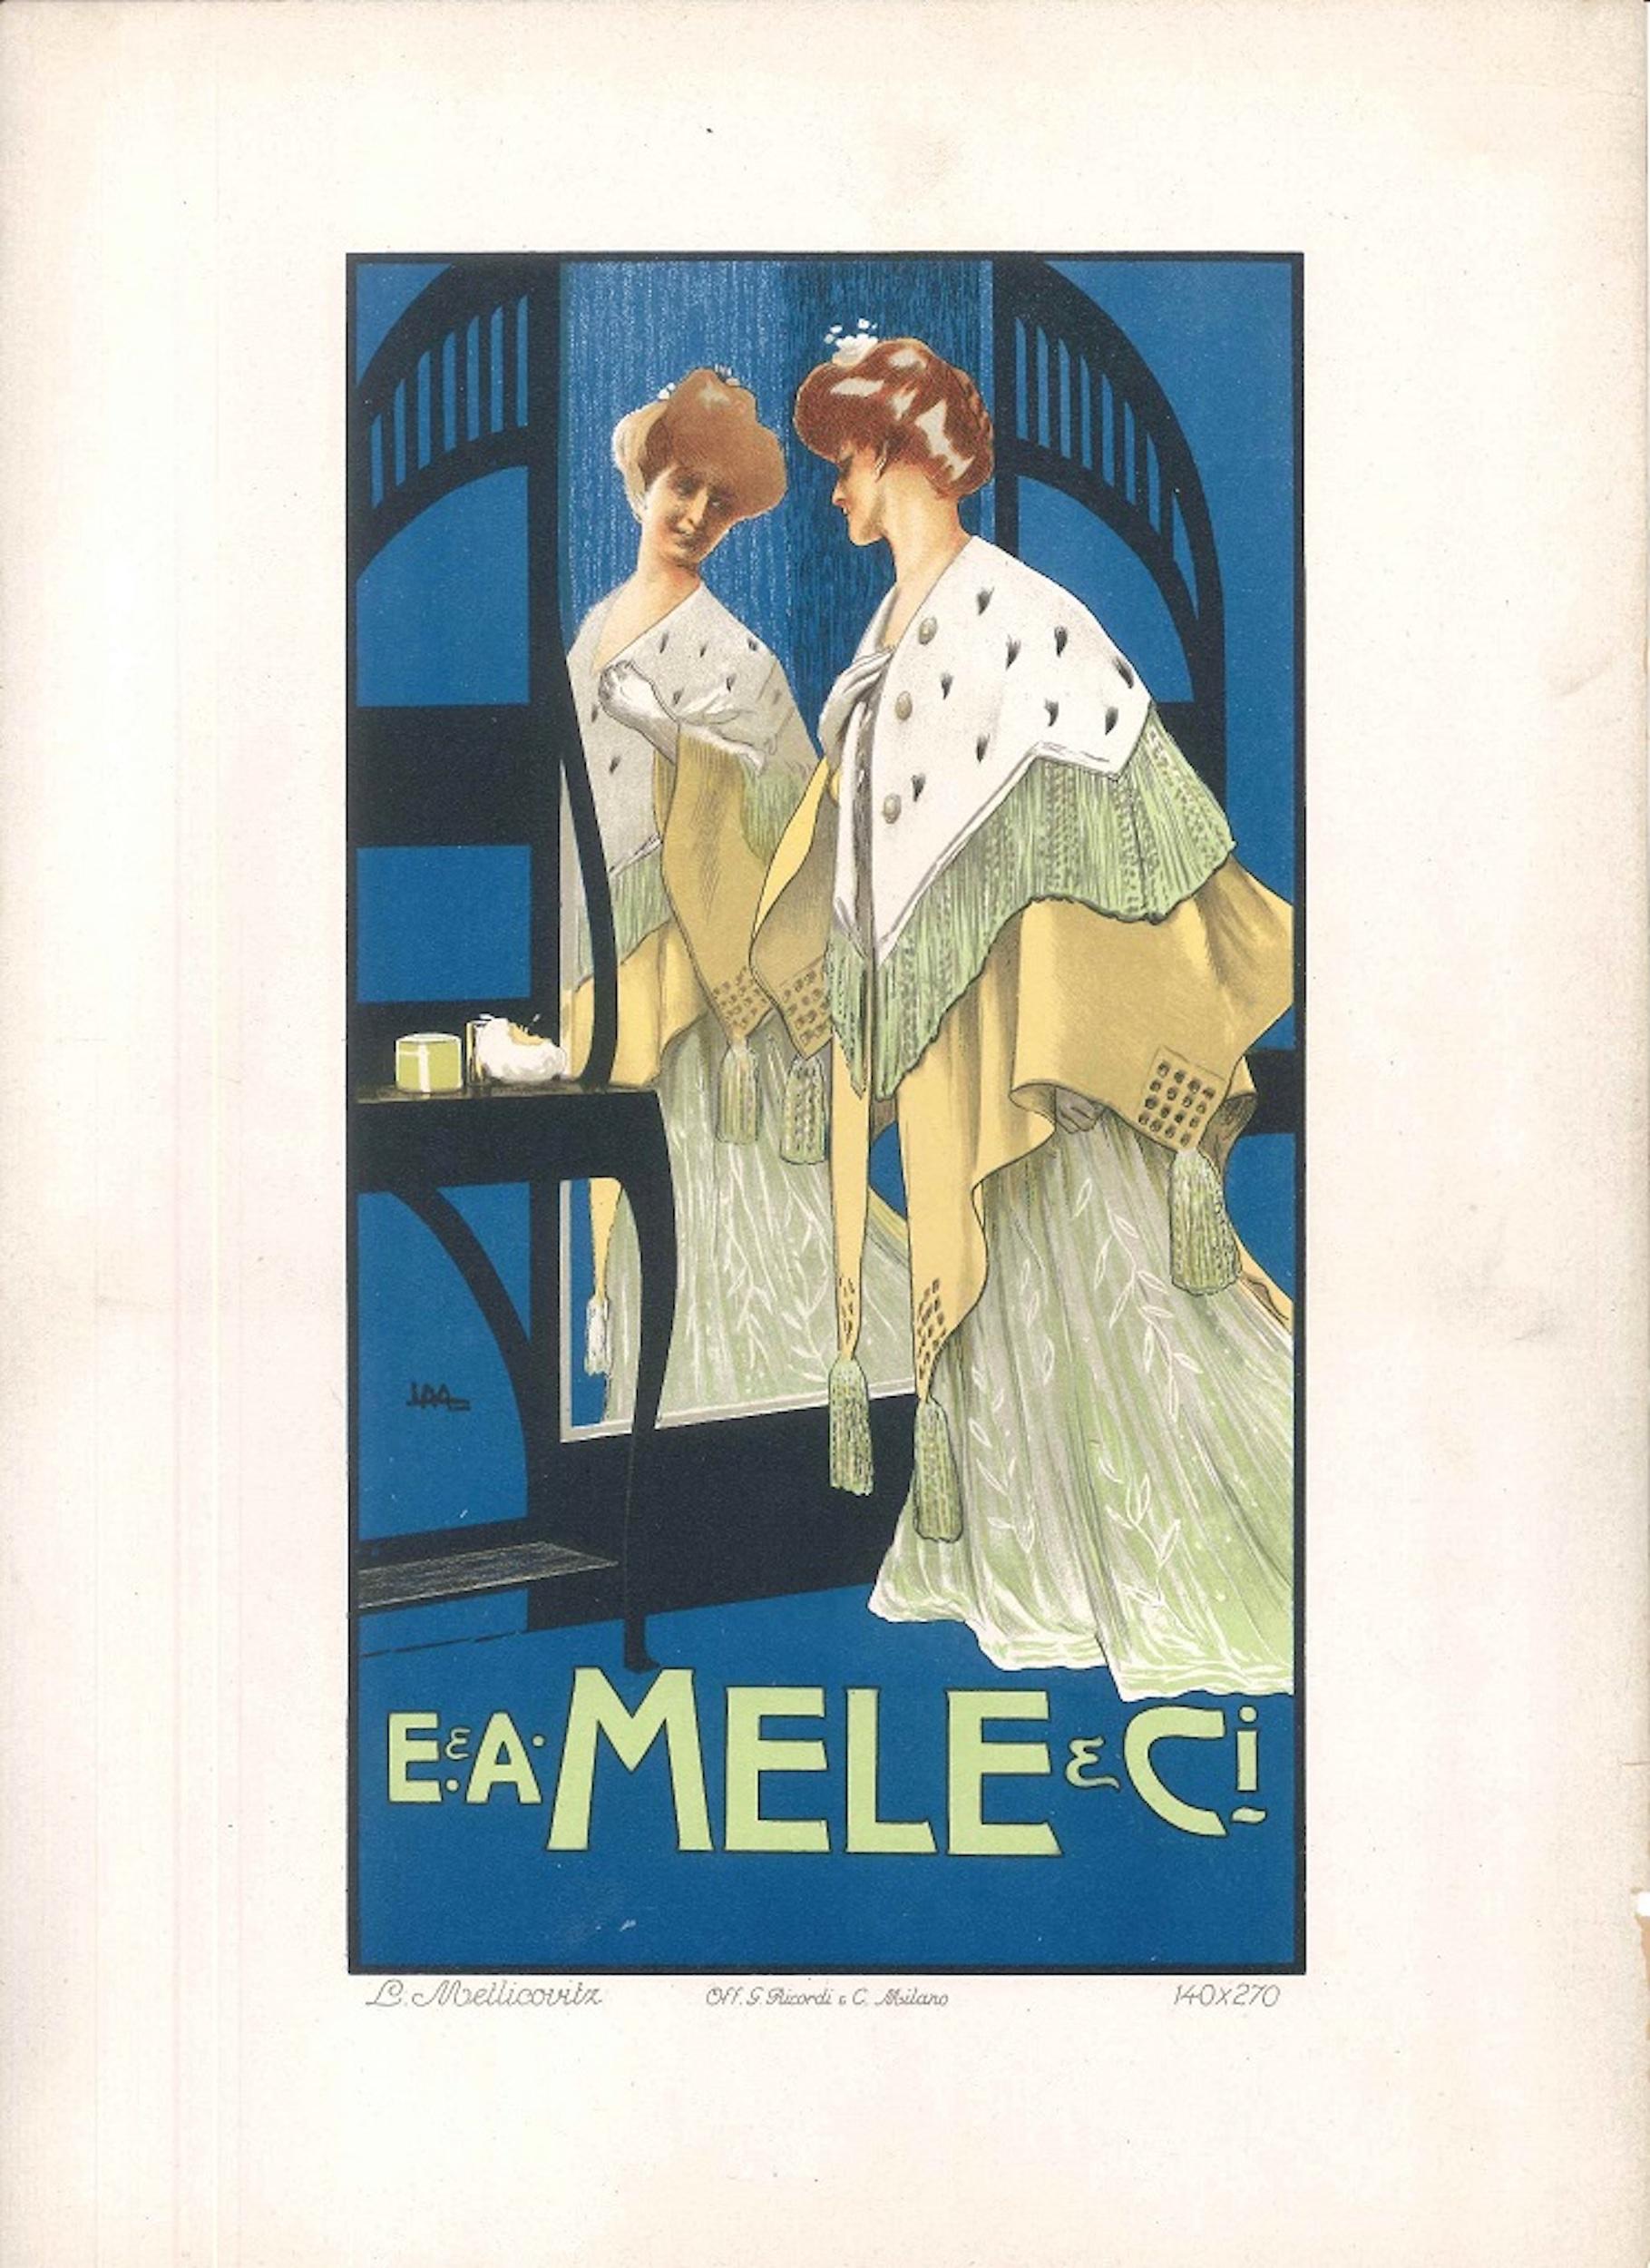 Mele - Vintage Advertising Lithograph by L. Metlicovitz - 1900 ca. - Print by Leopoldo Metlicovitz